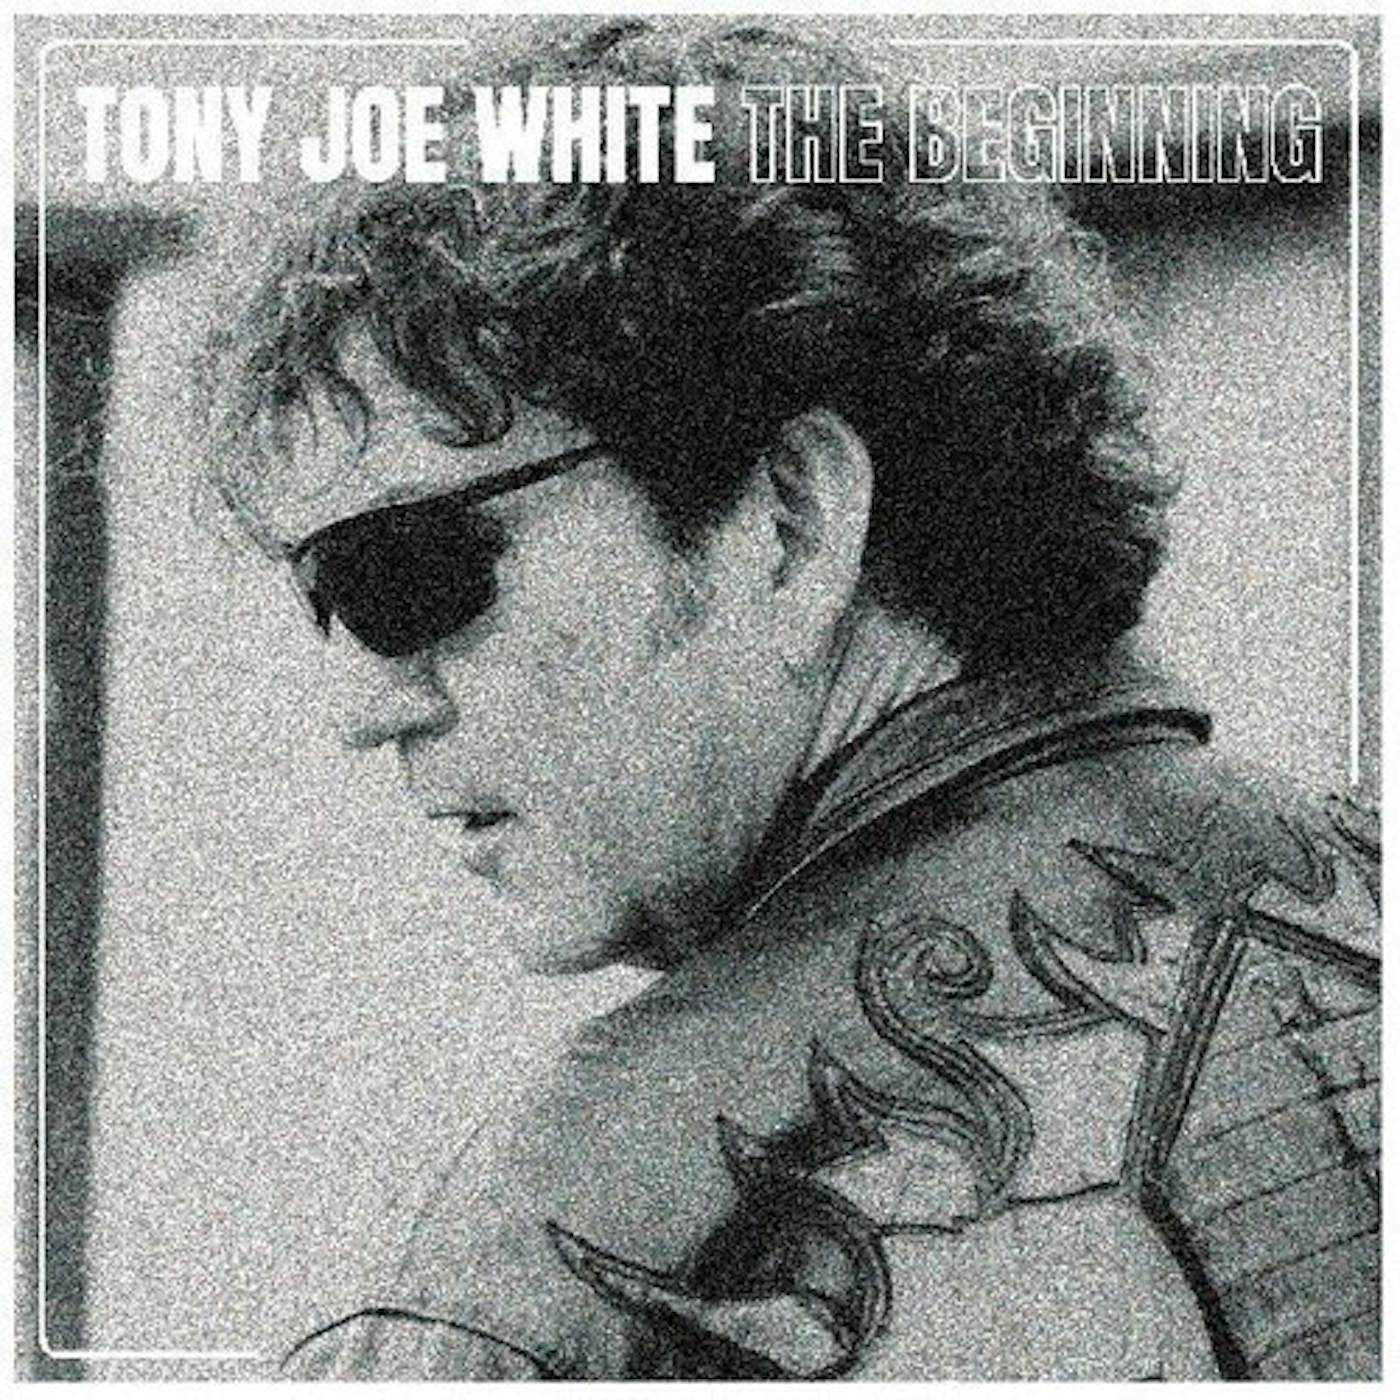 Tony Joe White BEGINNING Vinyl Record